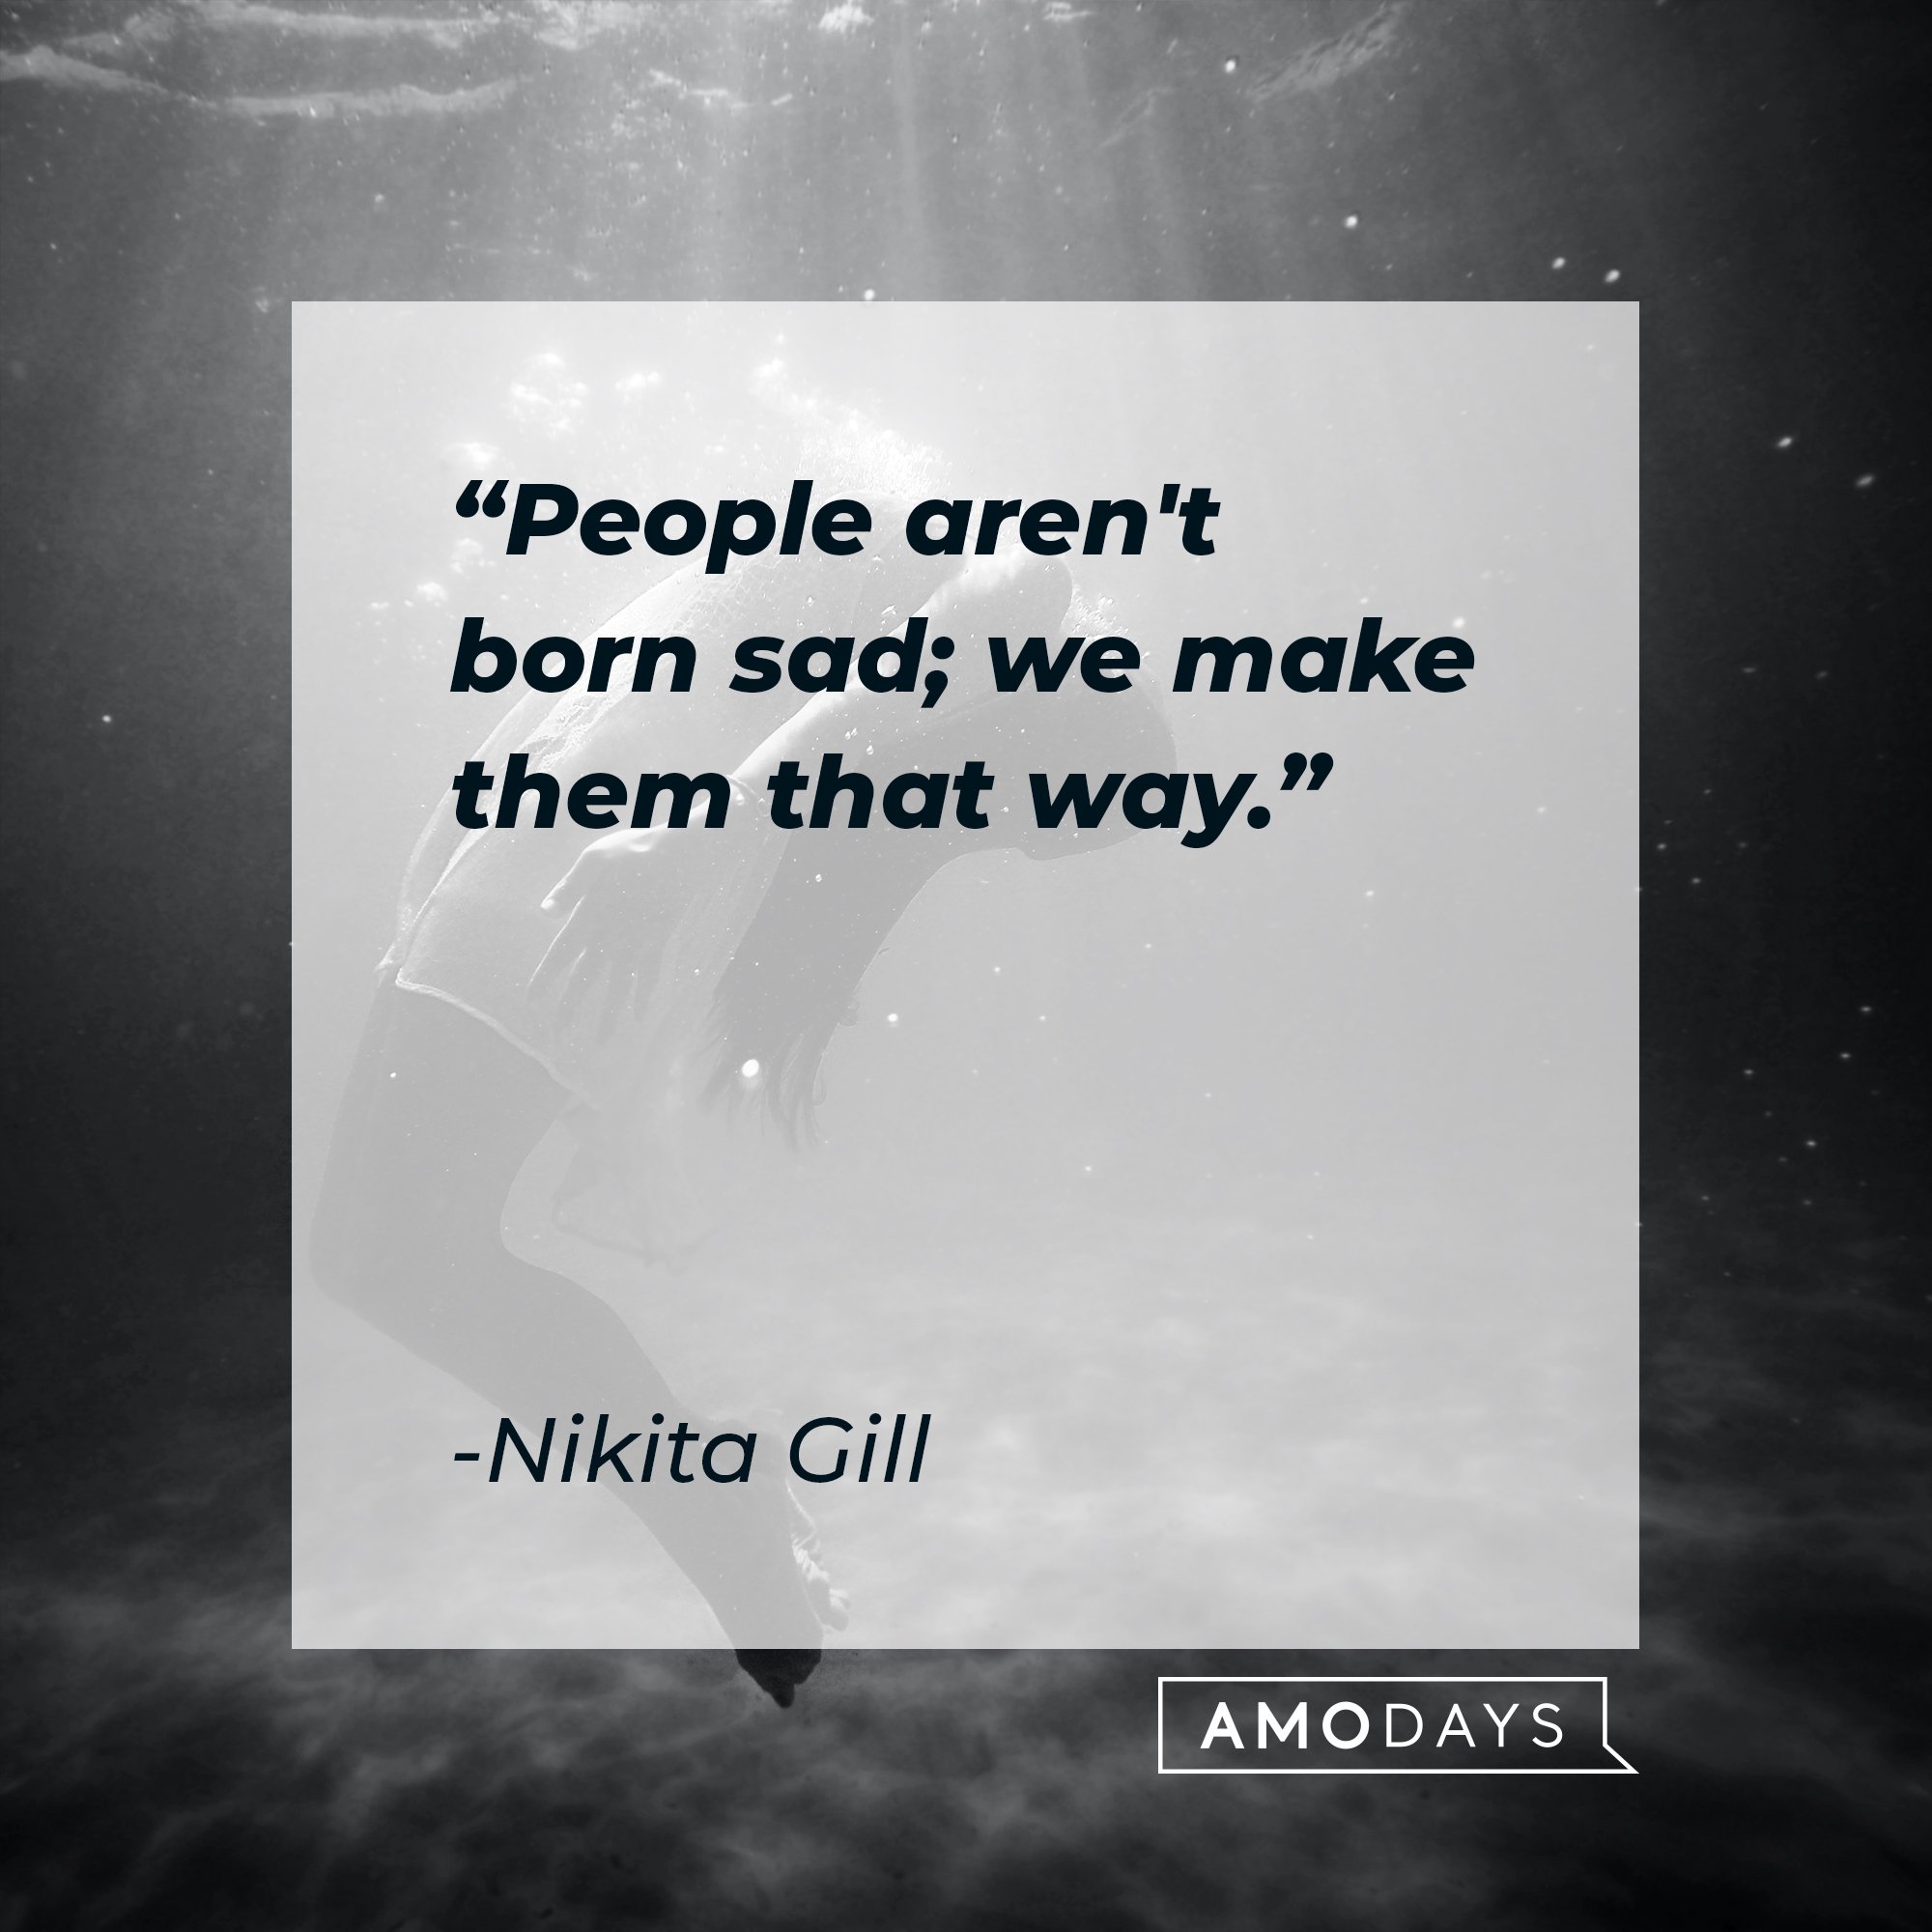 Nikita Gill's quote: "People aren't born sad; we make them that way." | Image: AmoDays